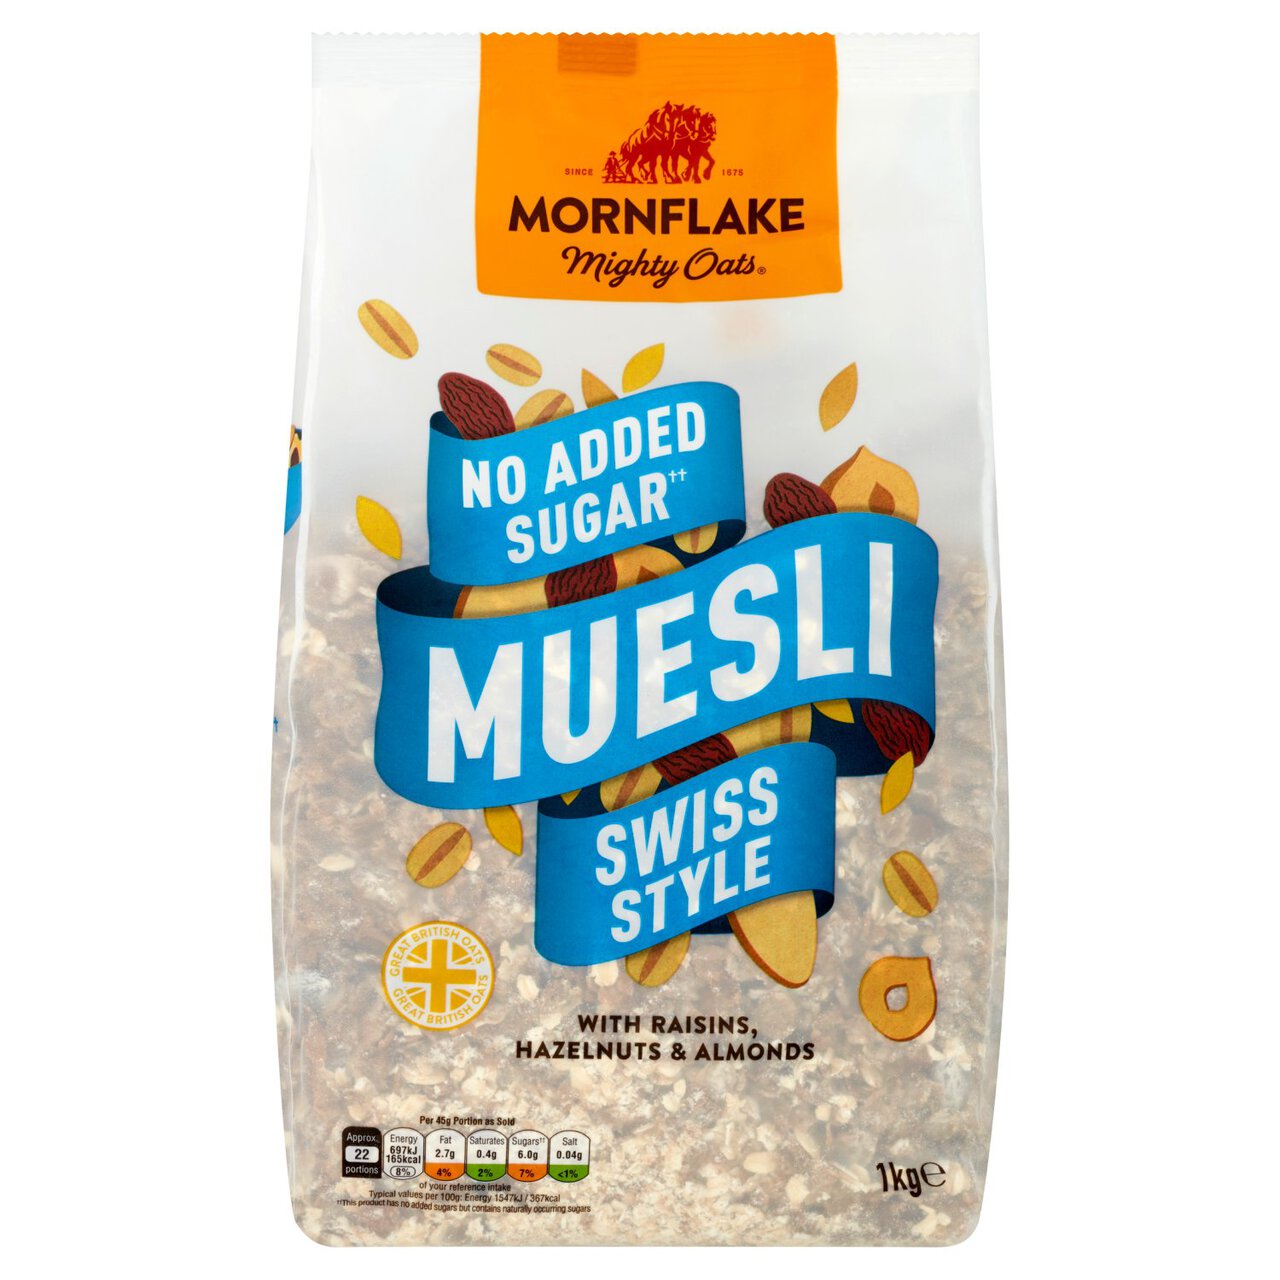 Mornflake Classic Swiss Style Muesli No Added Sugar 1kg